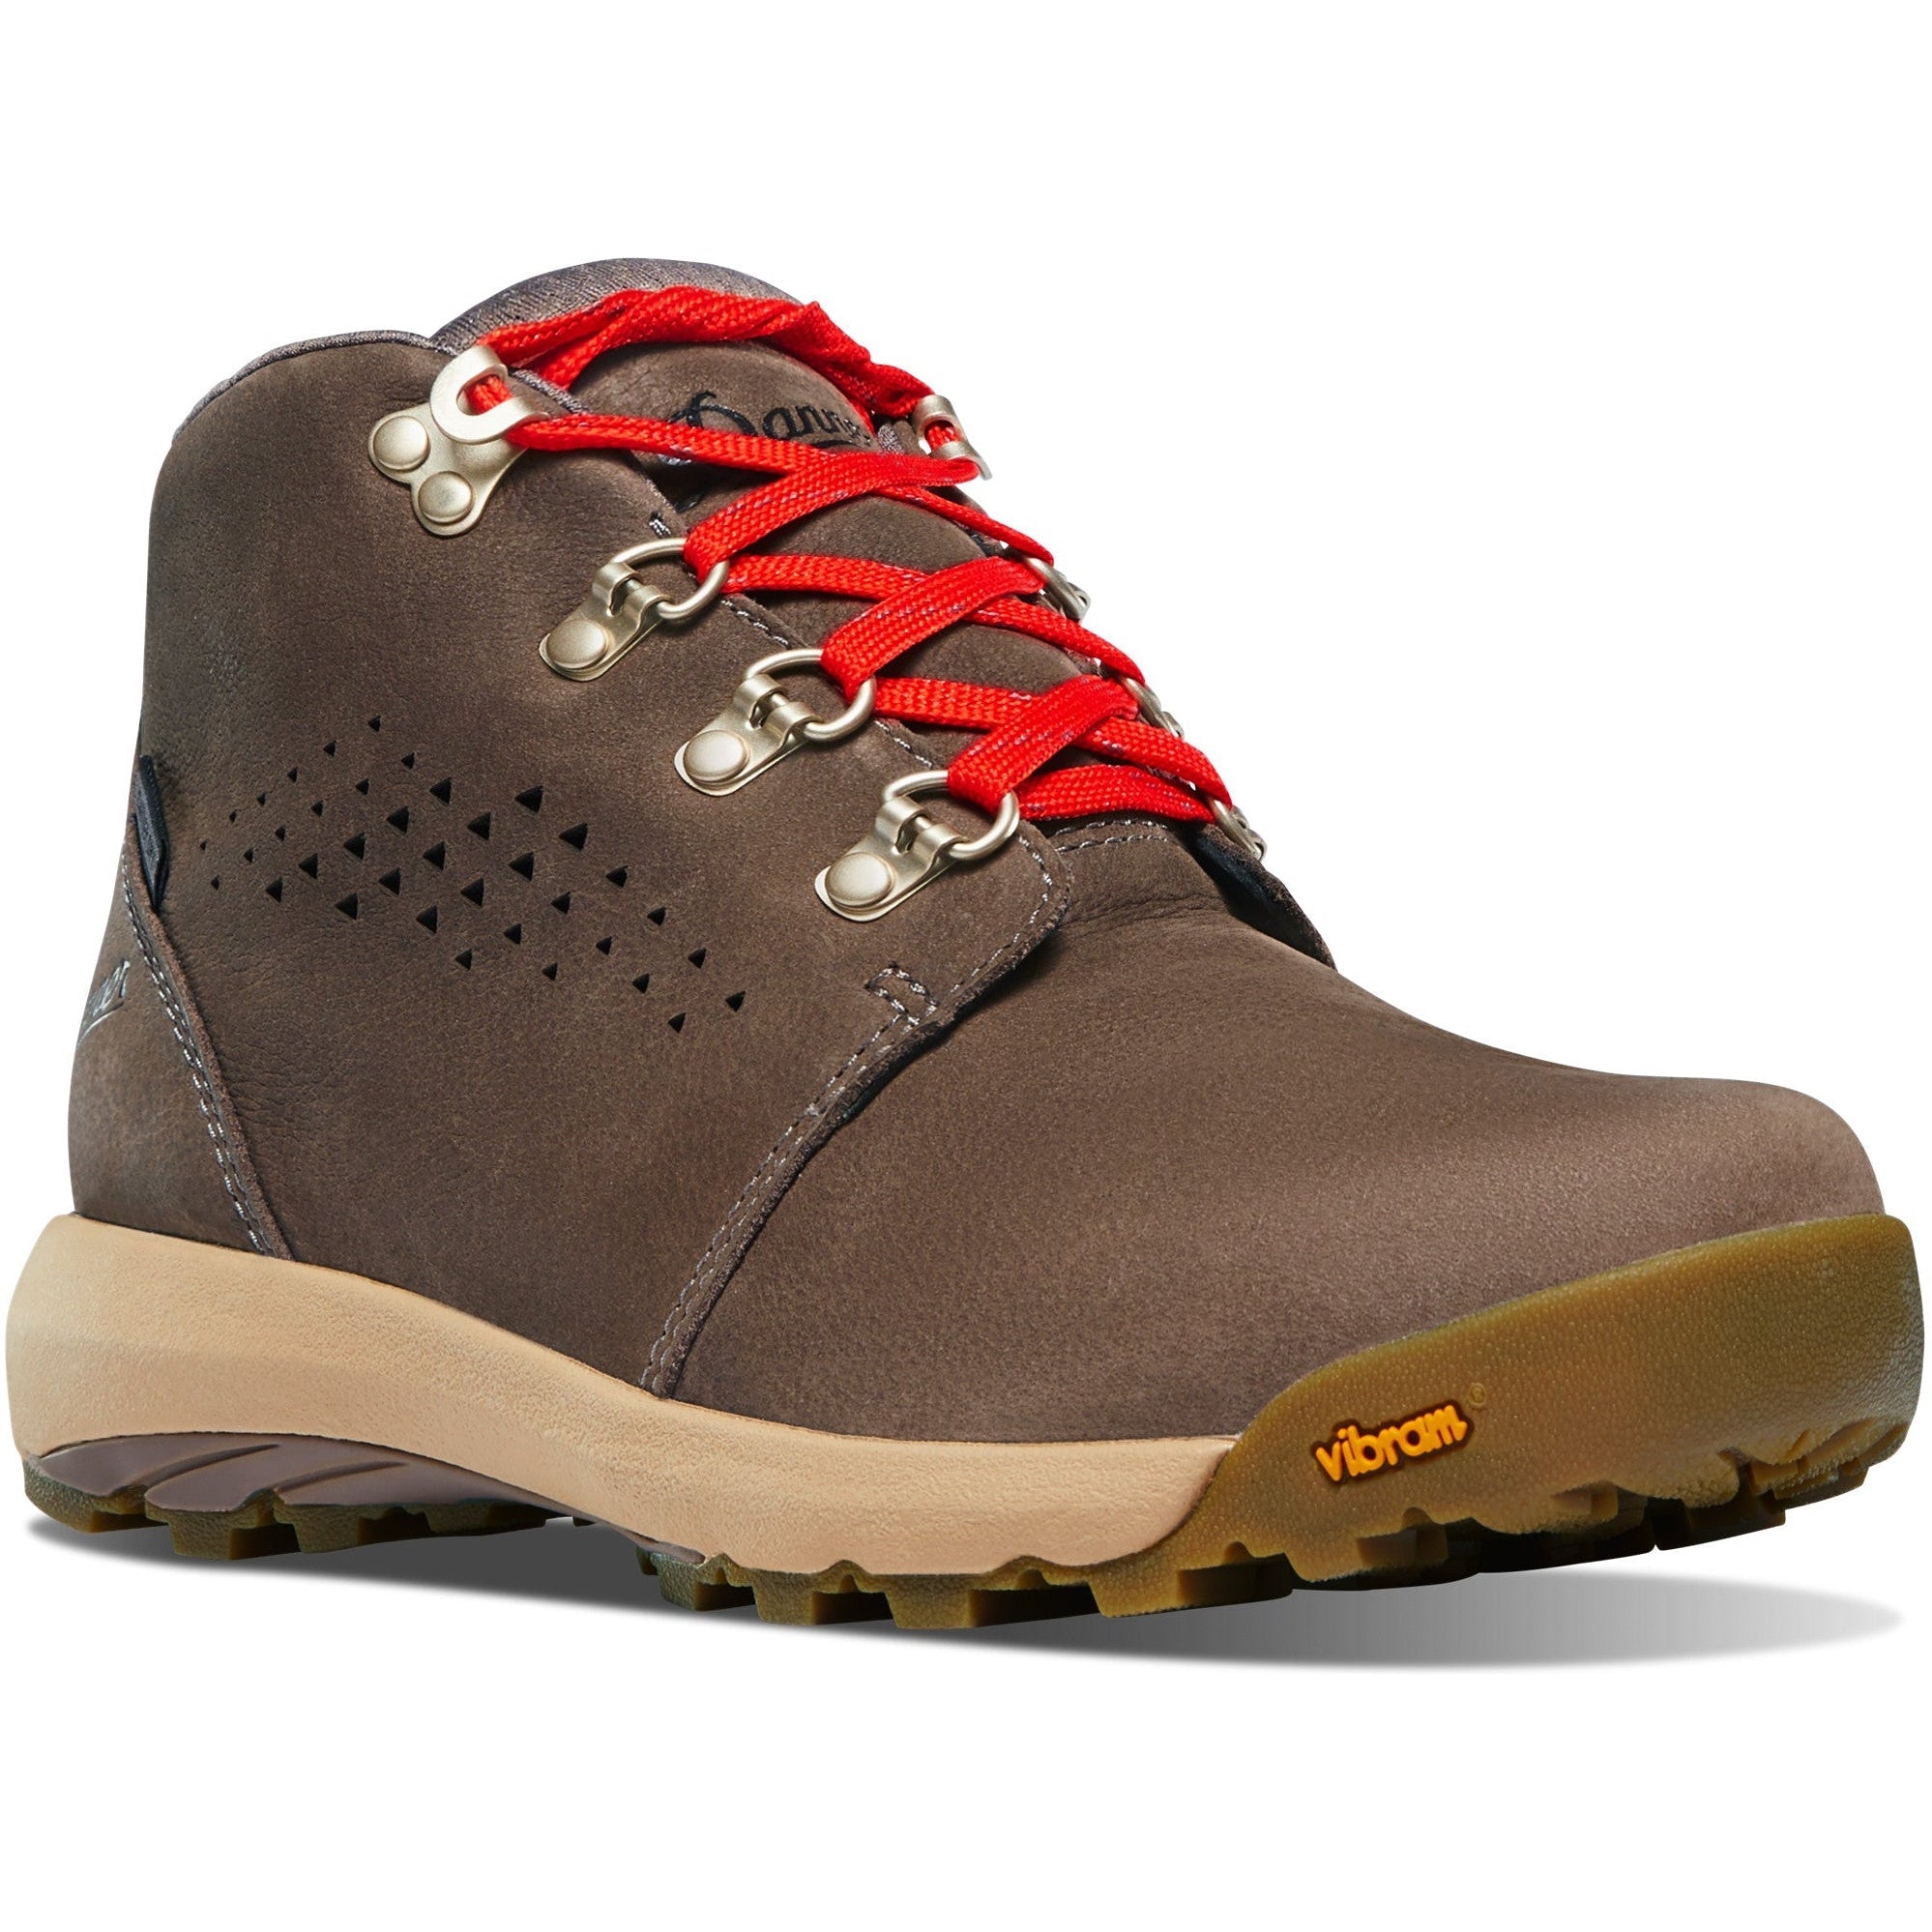 Danner Women's Inquire Chukka 4" WP Hiking Boot - Iron/Picante - 64505 5 / Medium / Gray - Overlook Boots